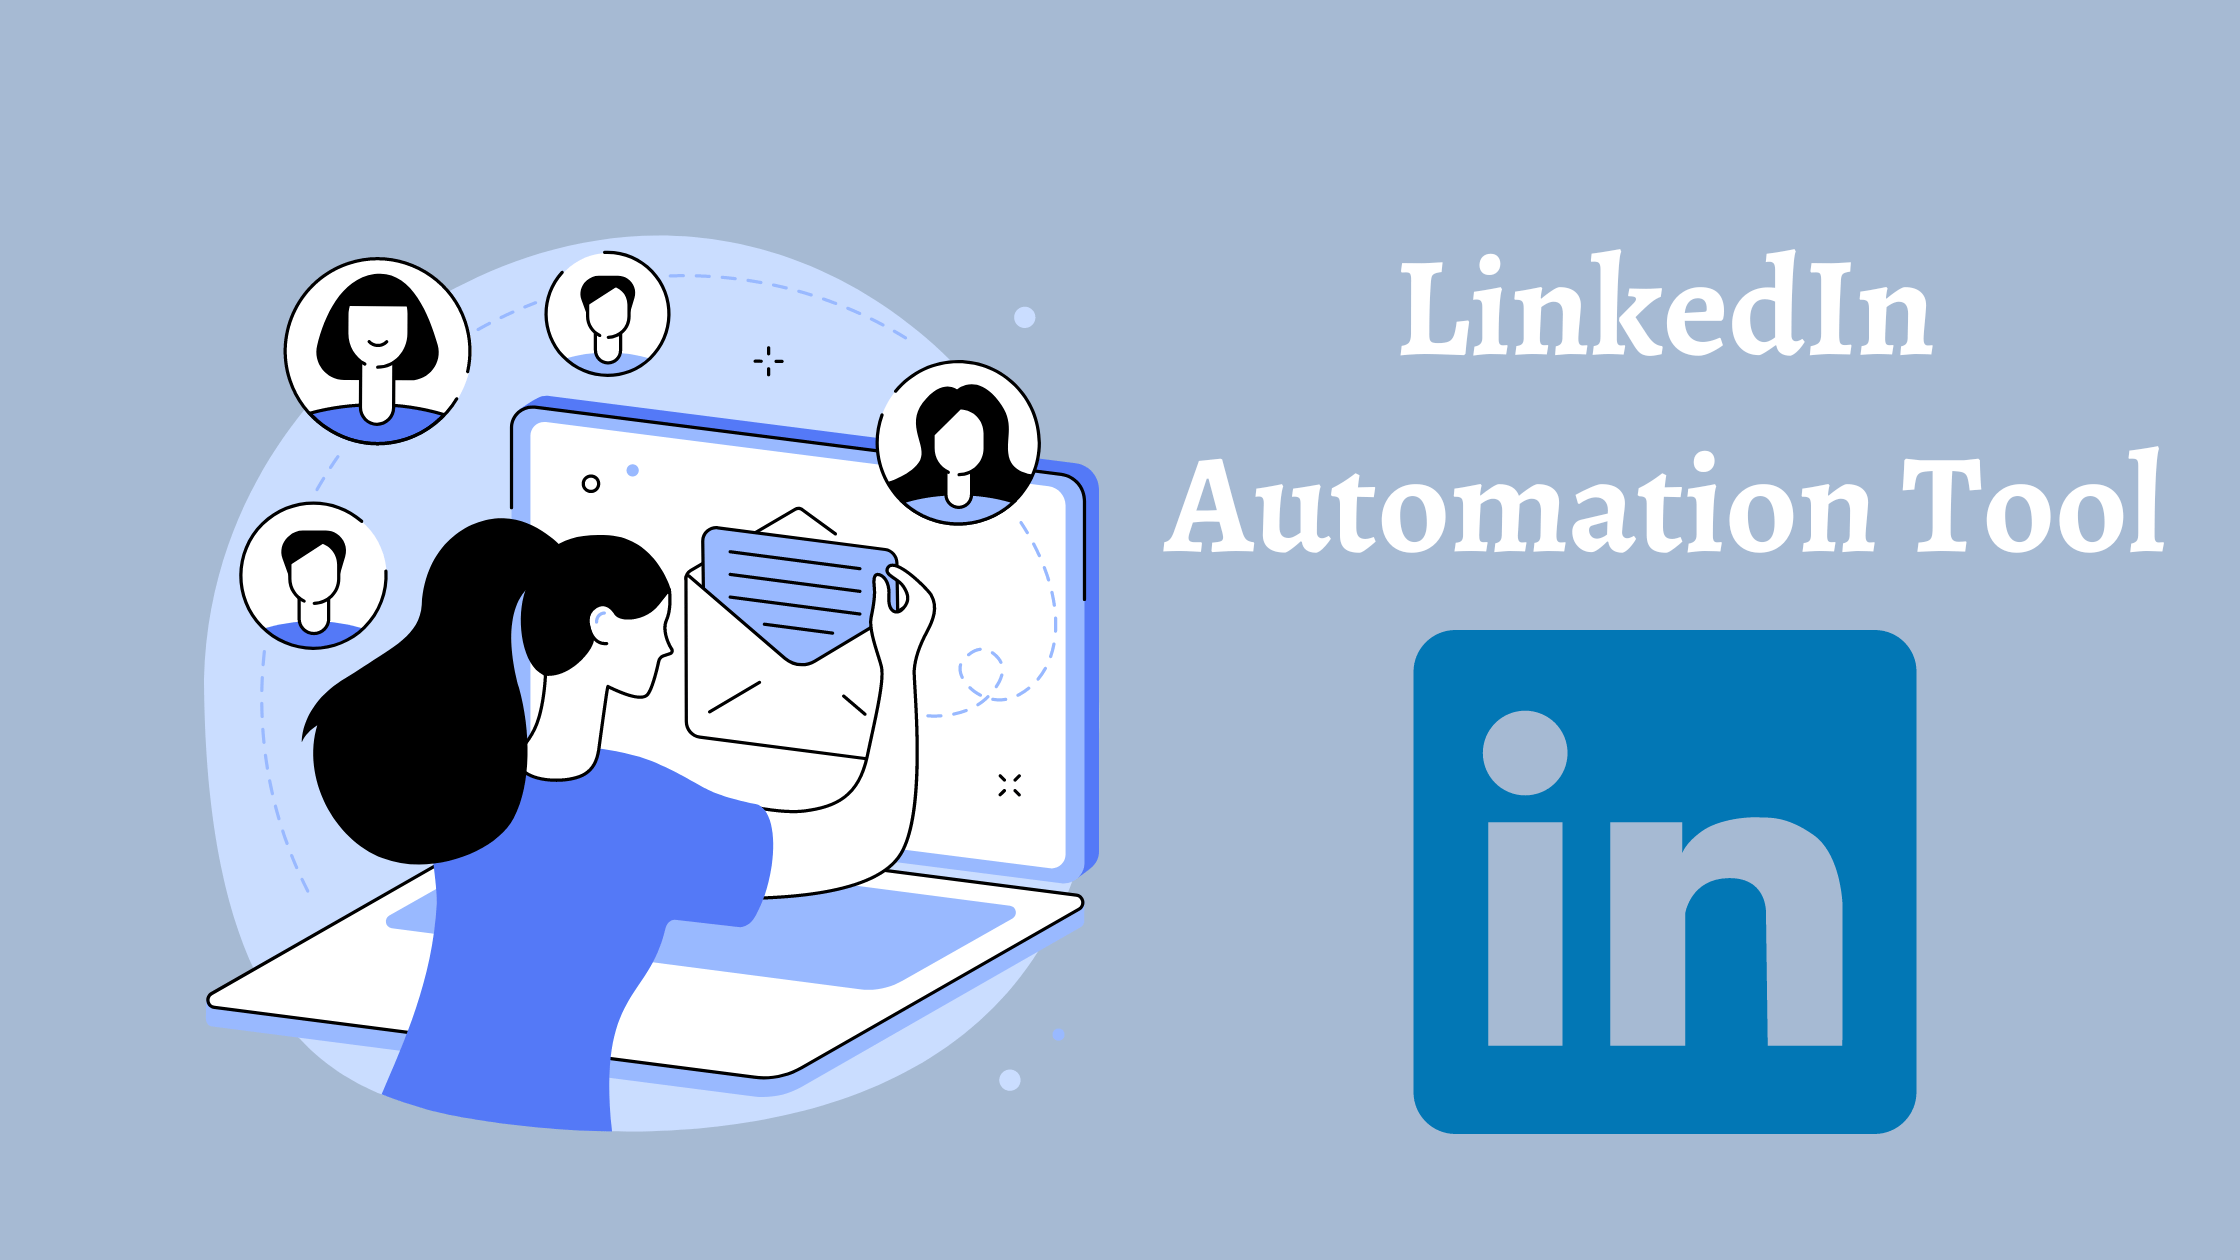 LinkedIn Automation Tool